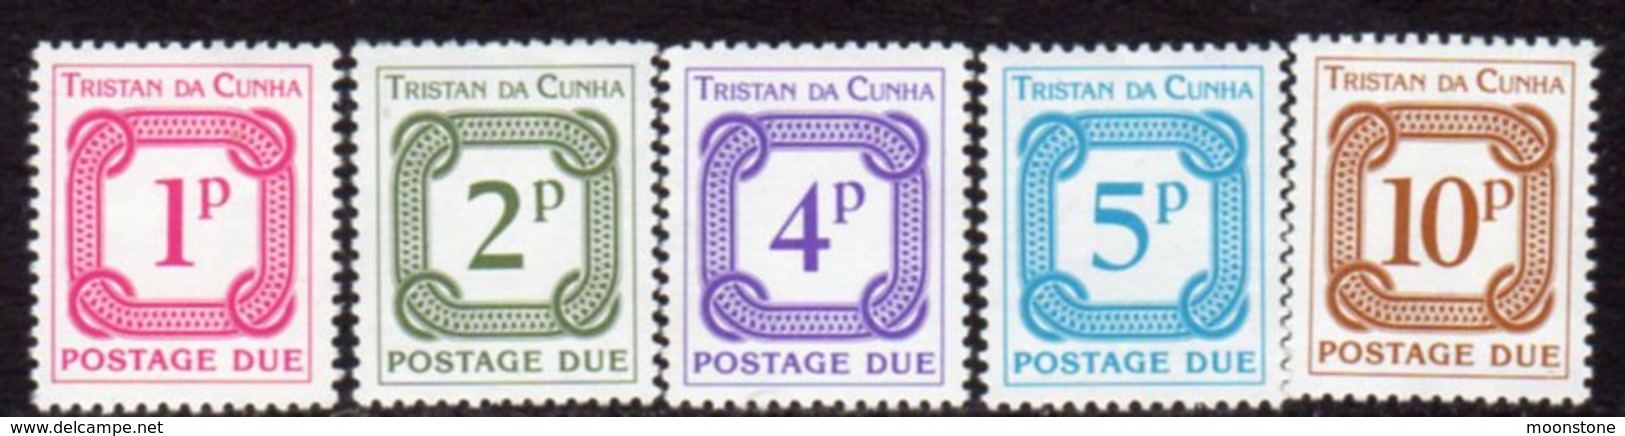 Tristan Da Cunha 1976 Postage Dues, Wmk. Multiple Crown CA Diagonal Set Of 5, MNH, SG D11/15 - Tristan Da Cunha